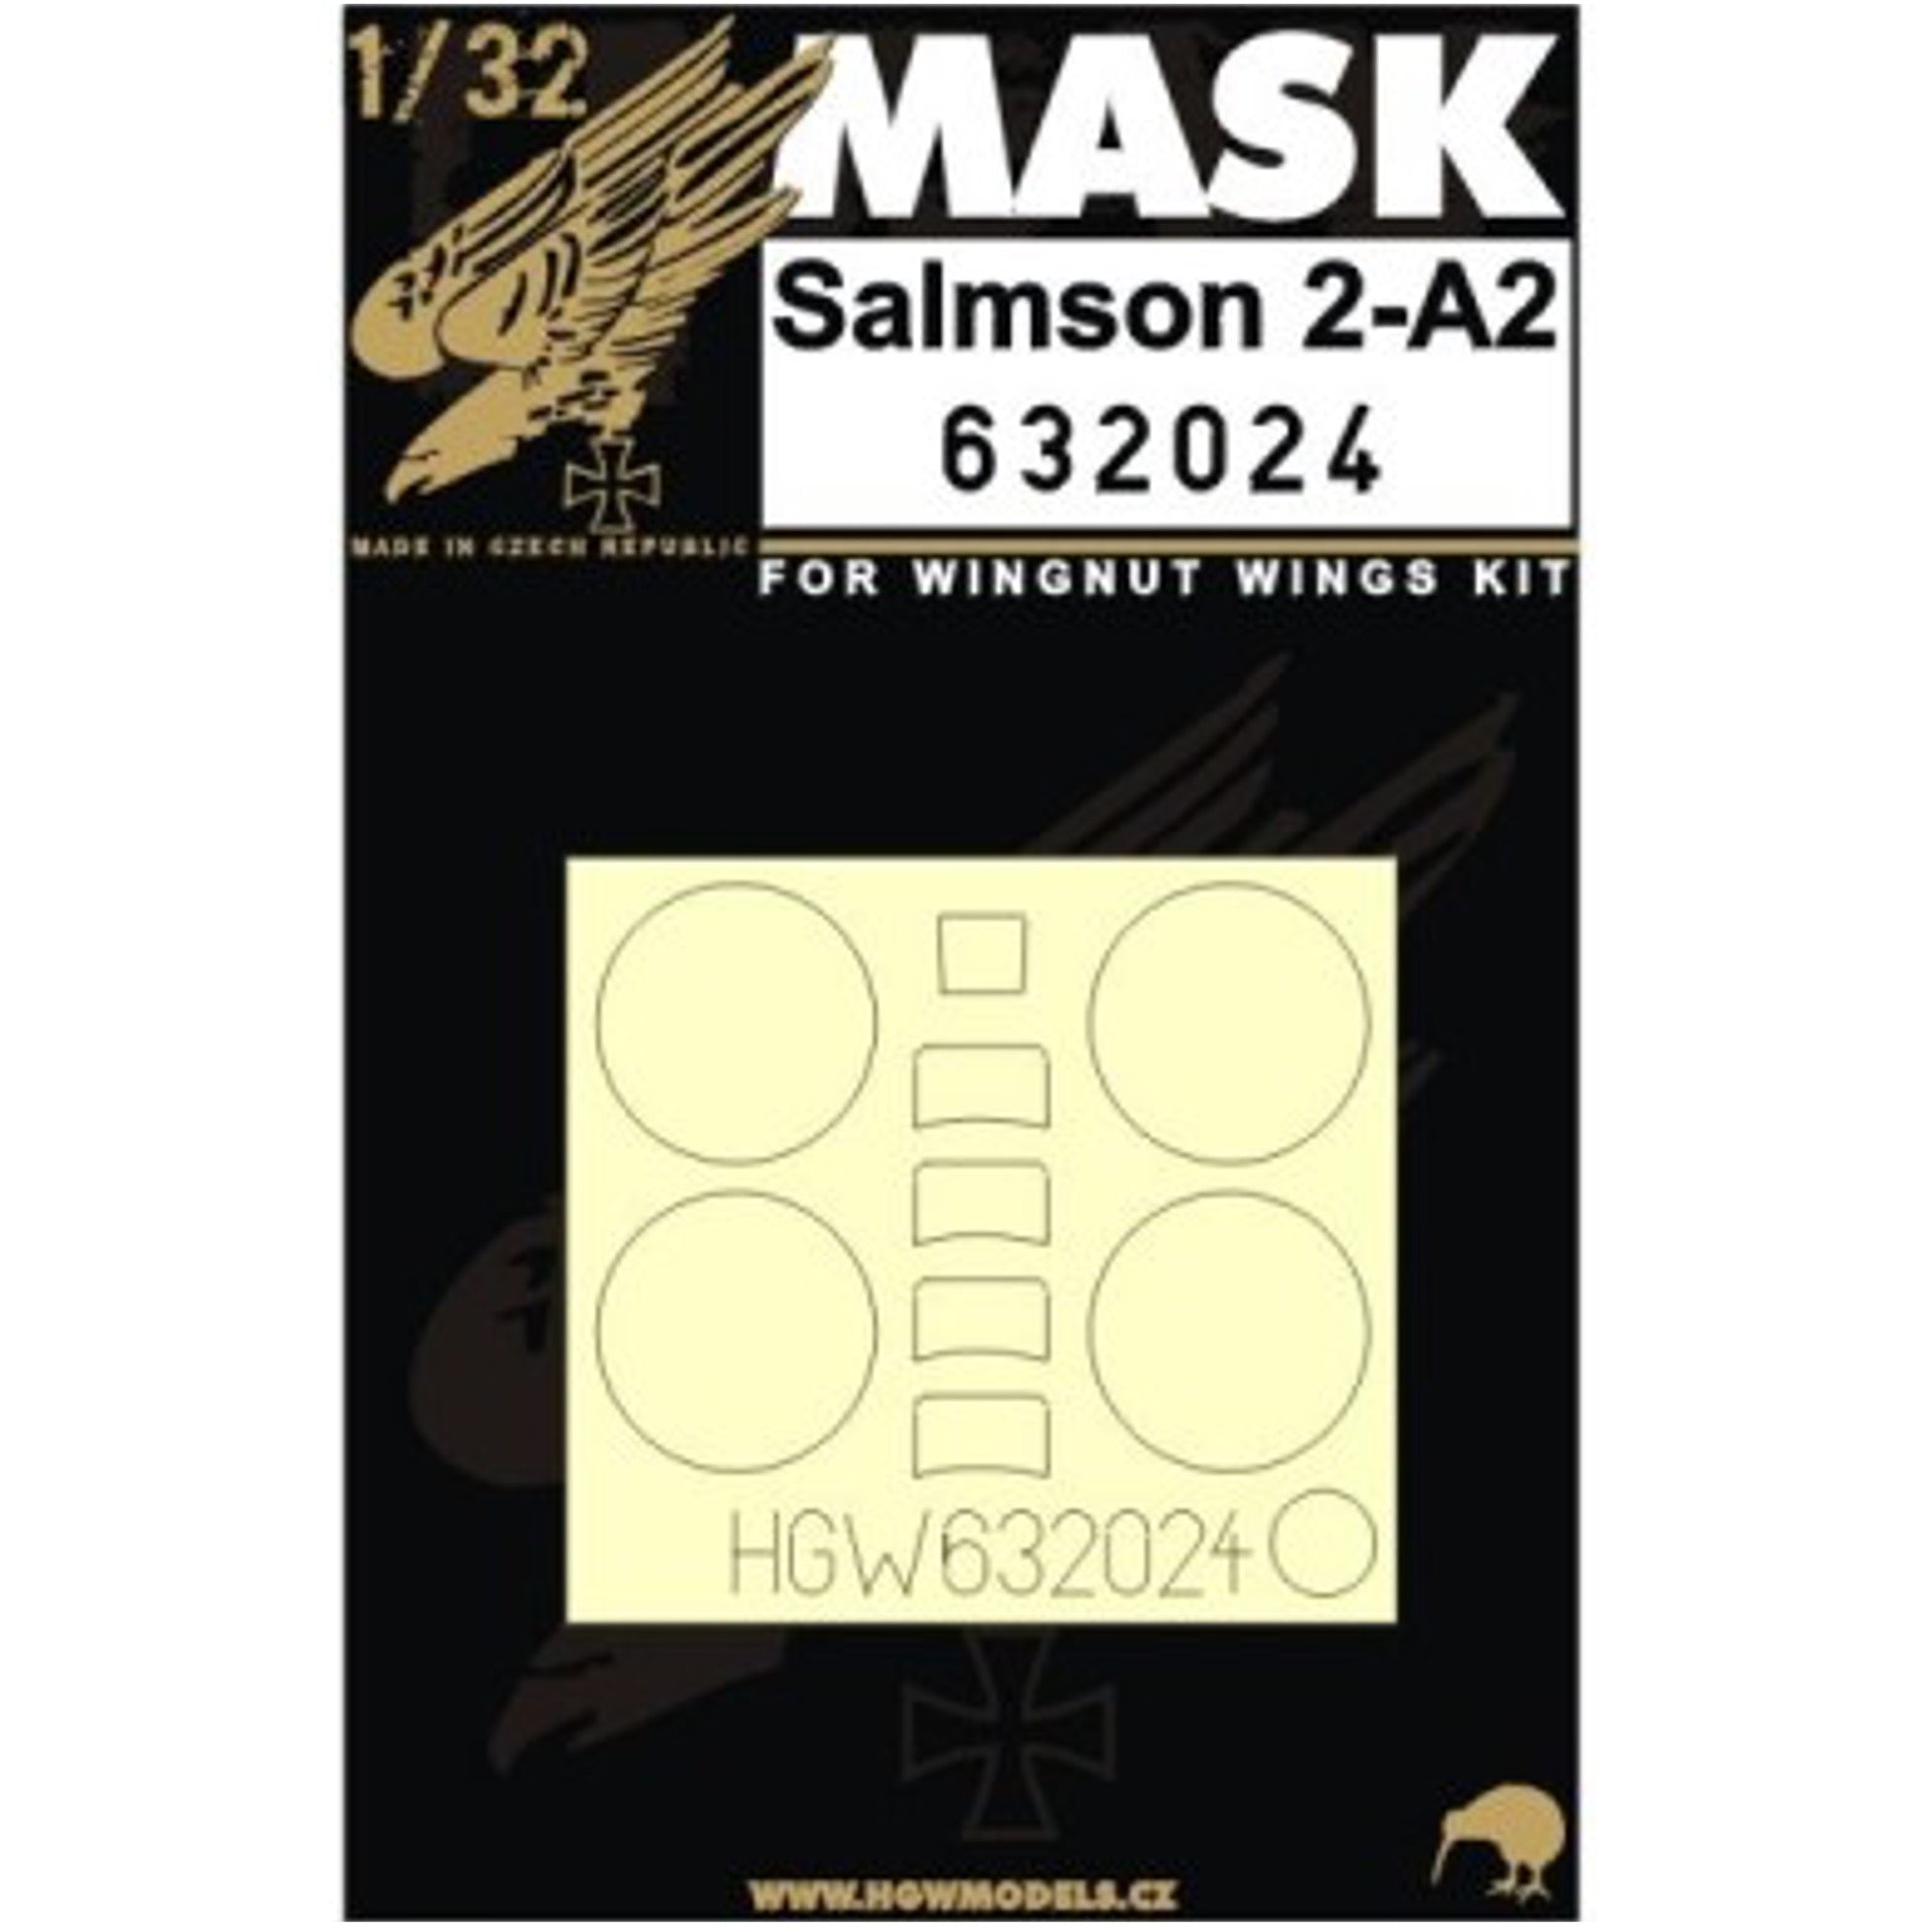 1/32 - Masks - Salmson 2-A2